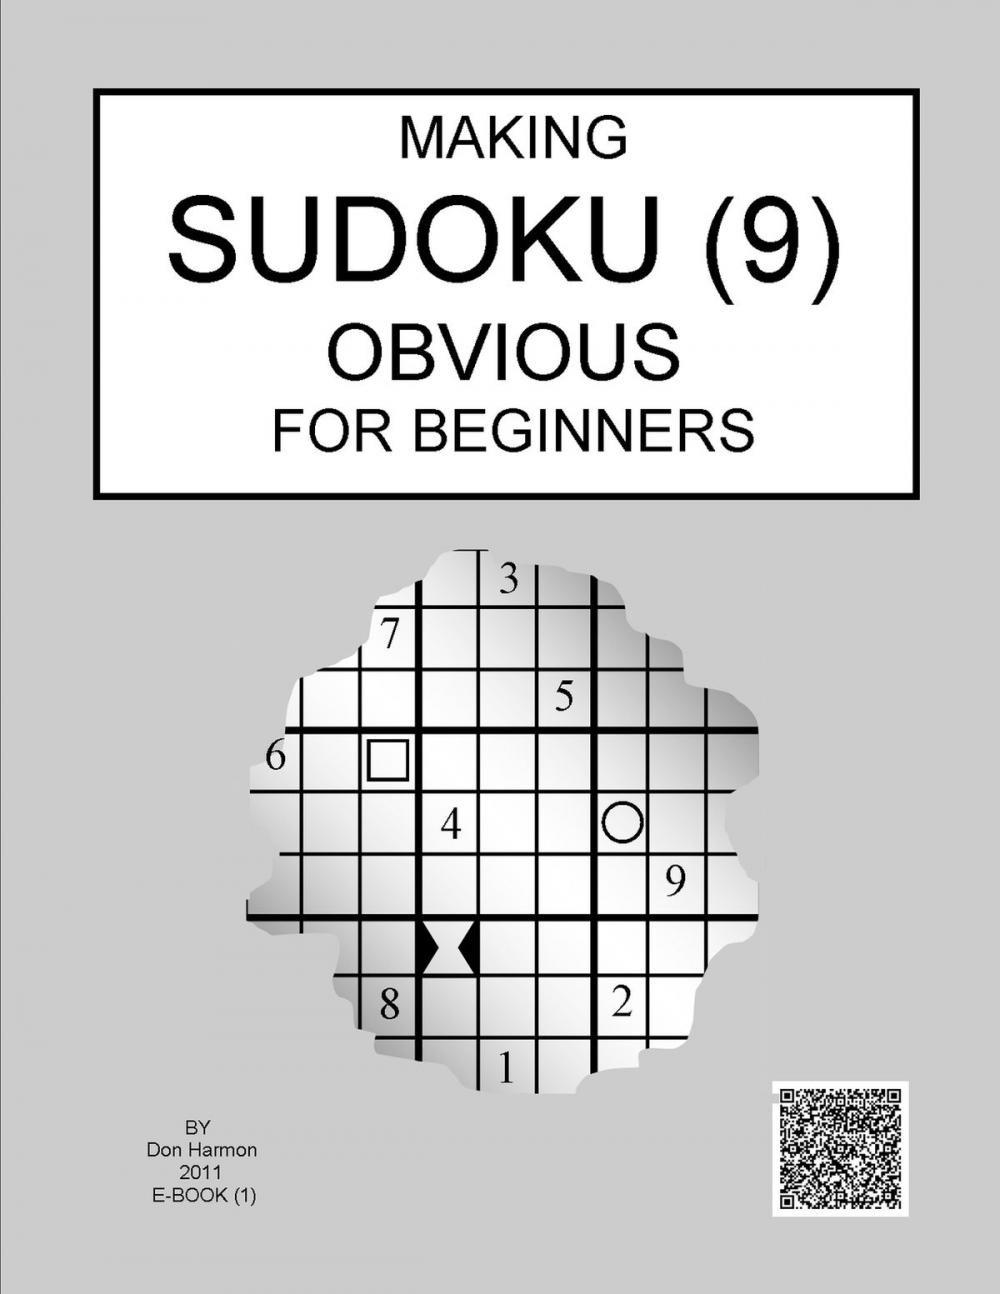 Big bigCover of Sudoku (9) Logic for Beginners